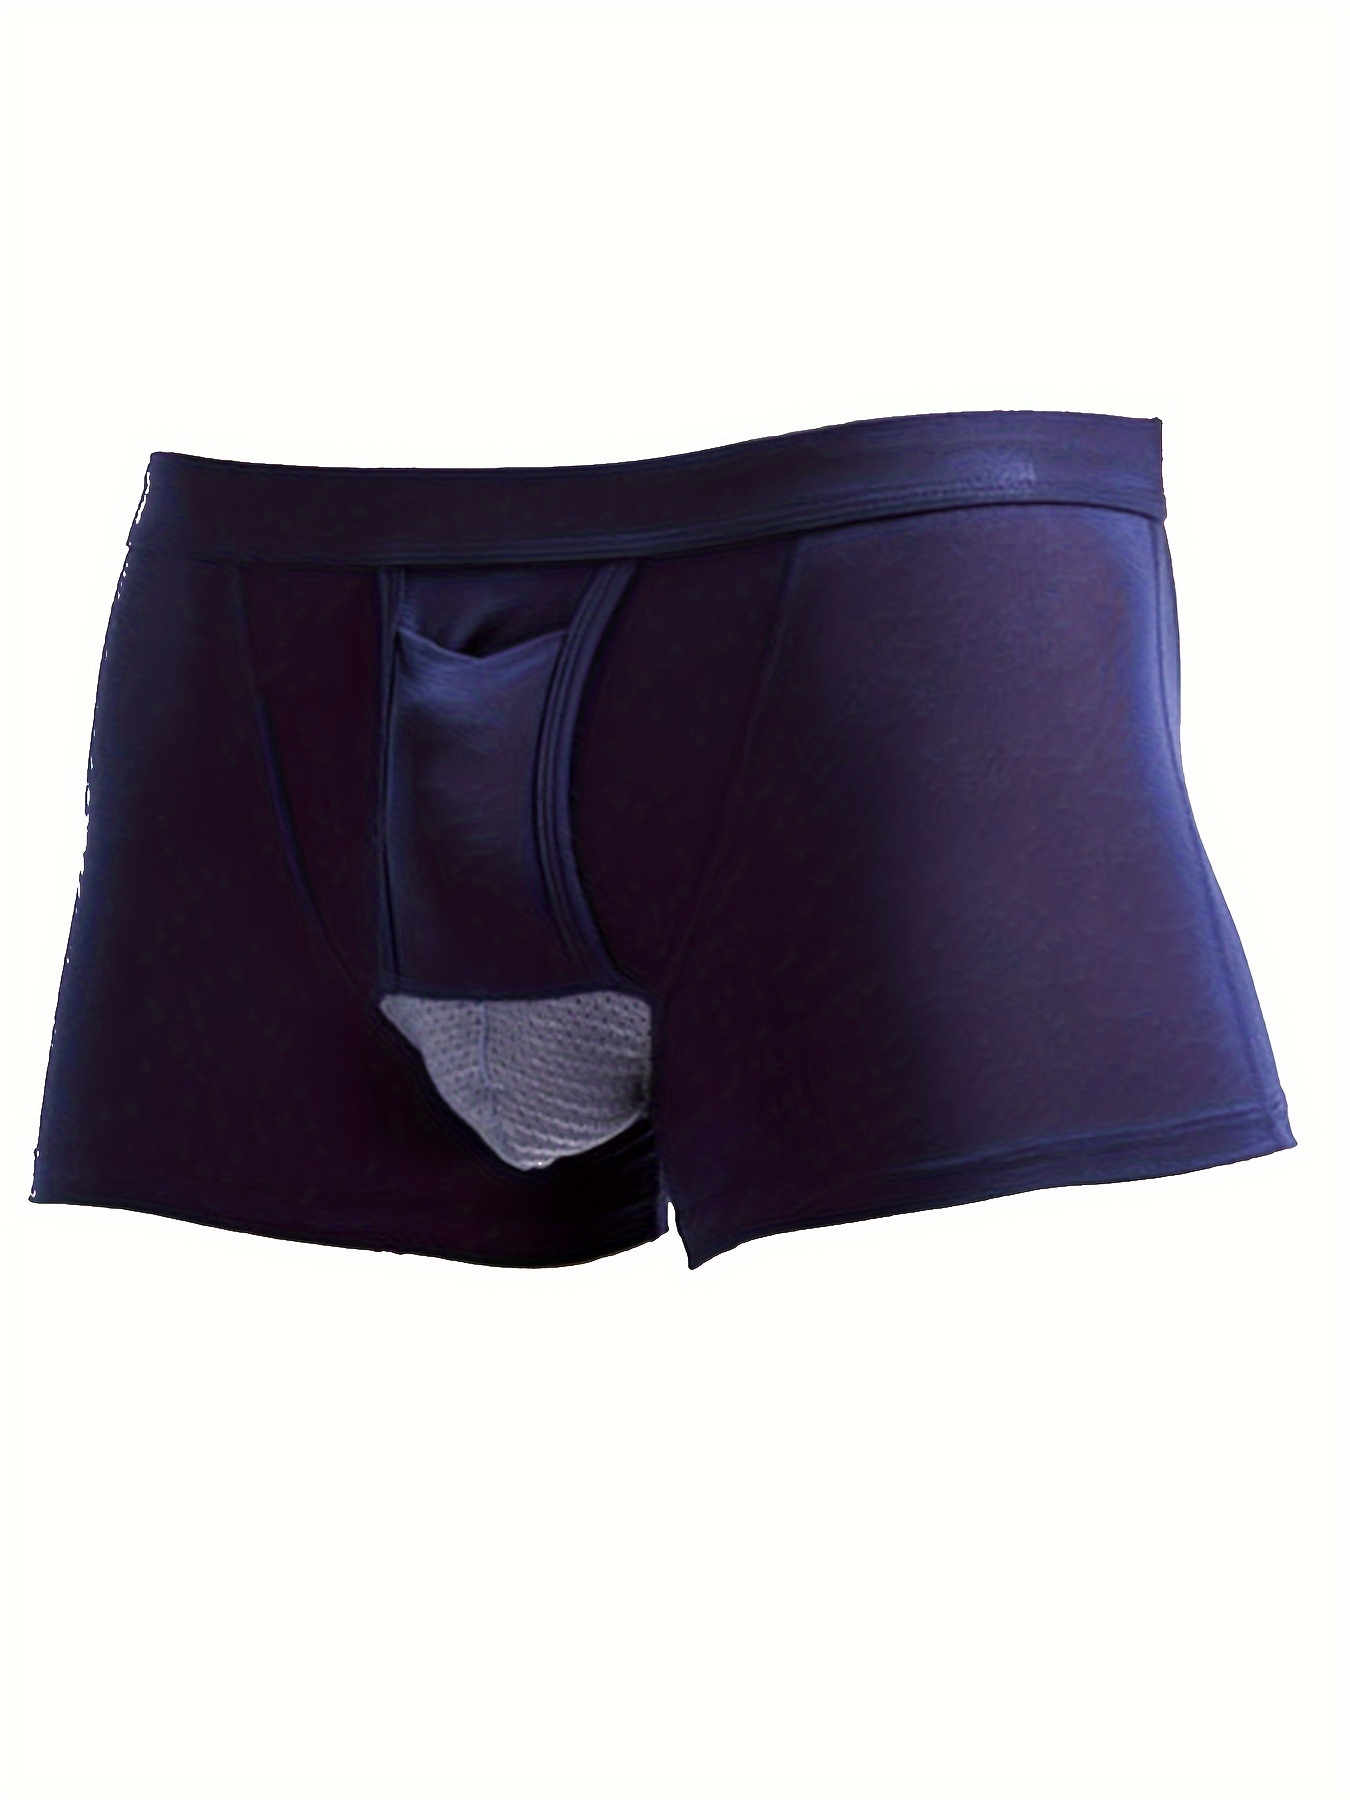 Men Sexy Briefs Open Front U Bulge Pouch Breathable Panties Mid